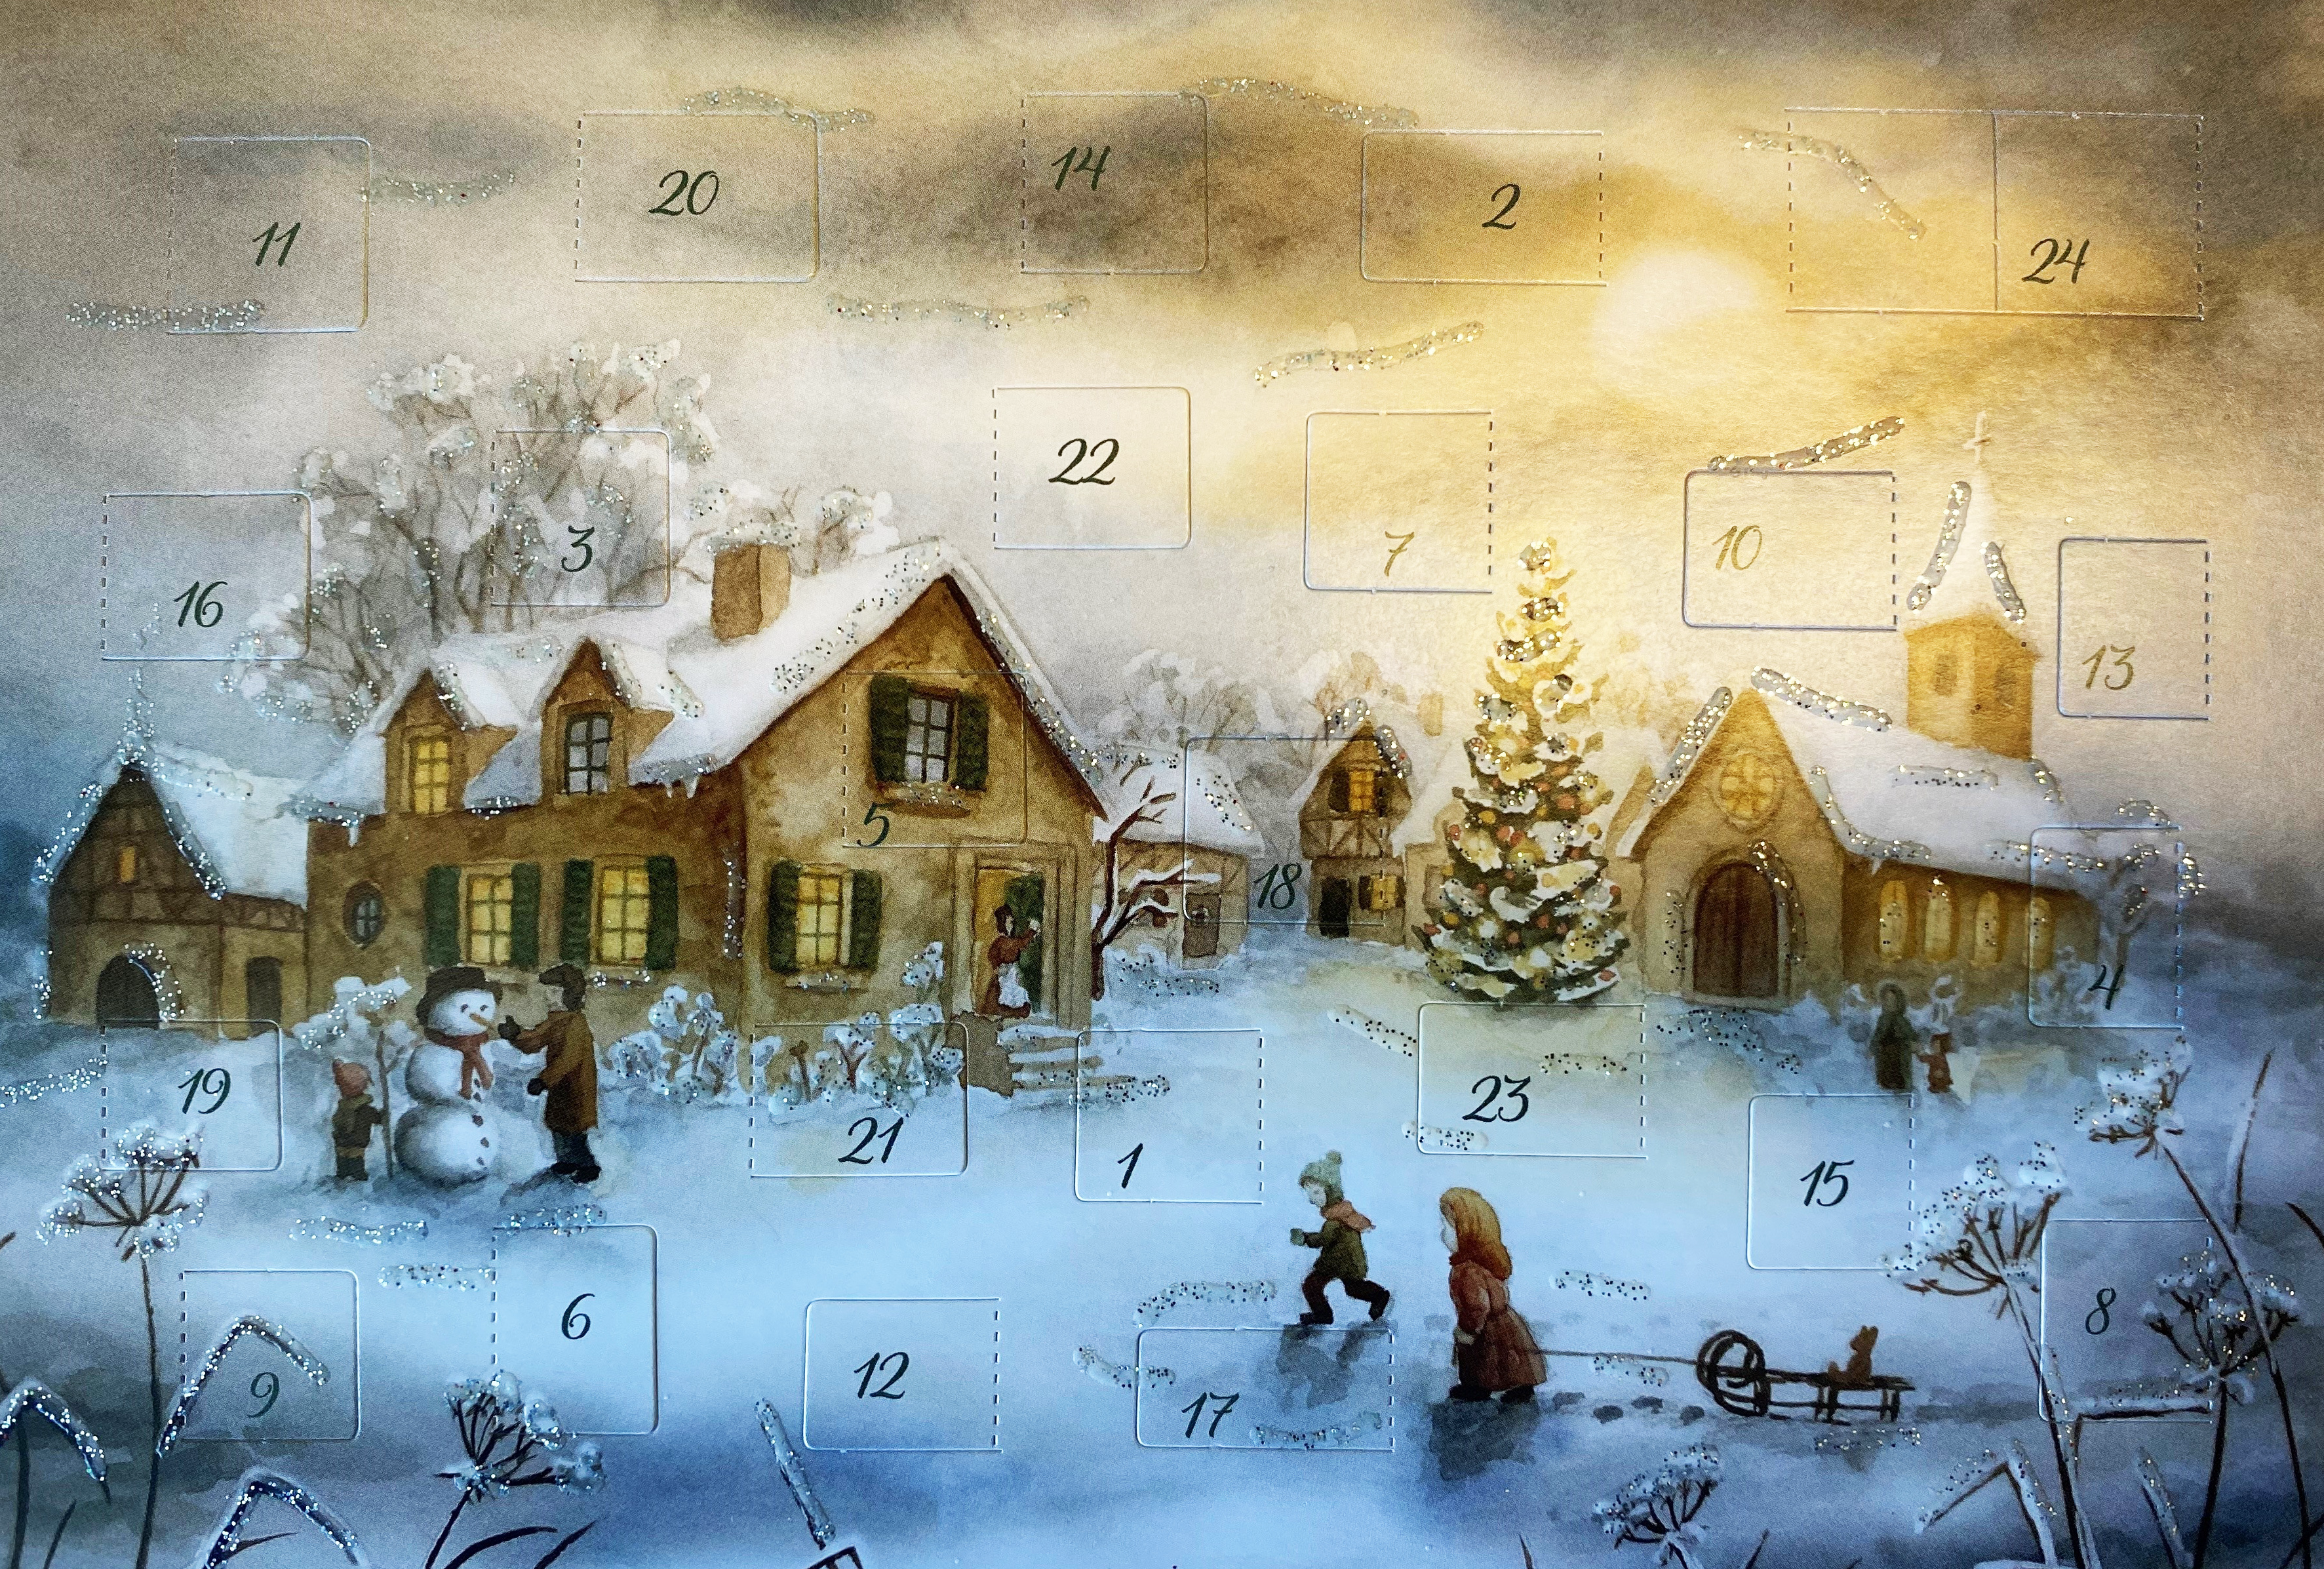 Village Snow Scene Advent Calendar GREETING CARD